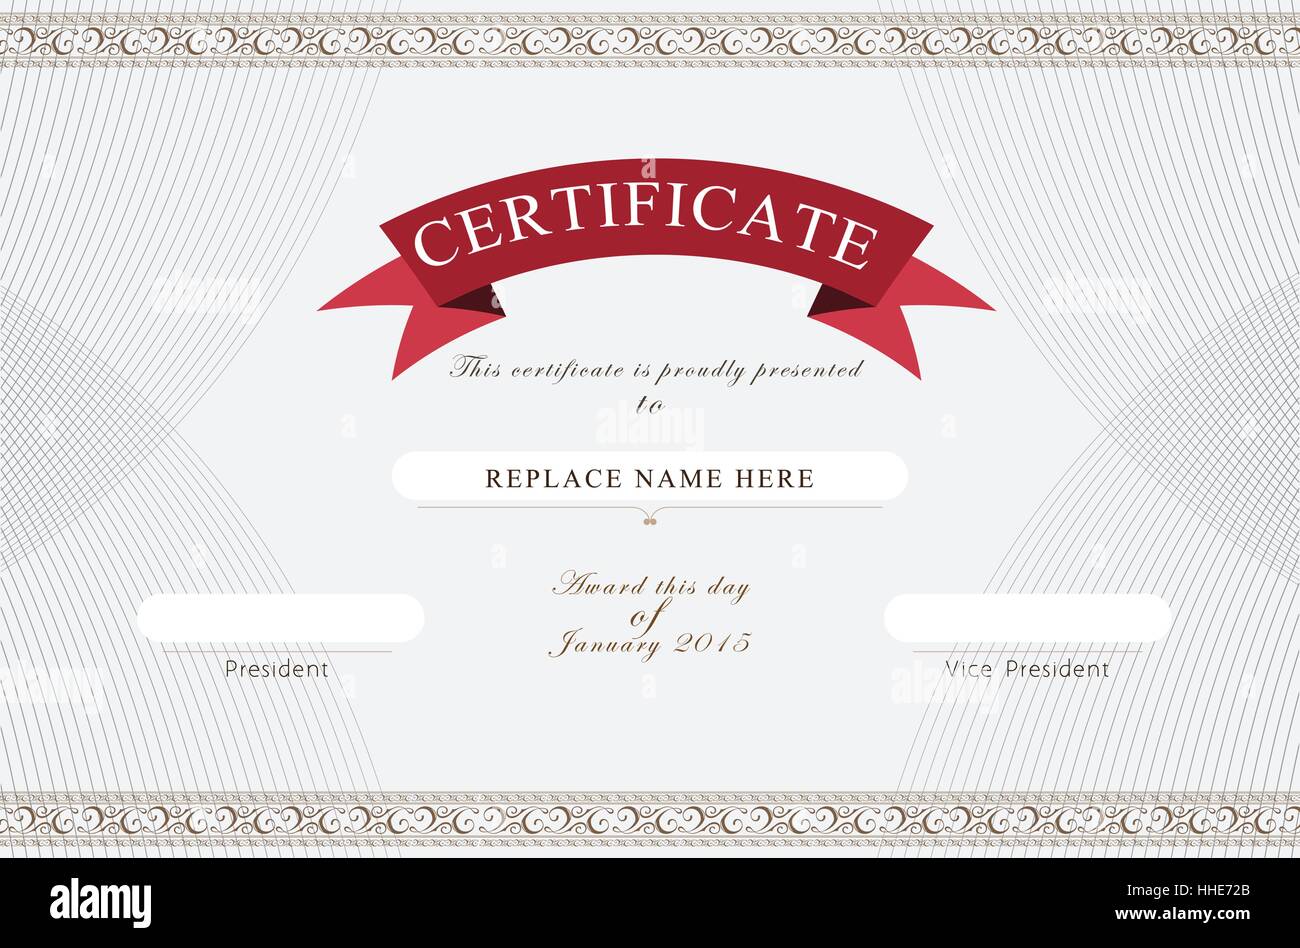 Certificate border, Certificate template. vector illustration Within Award Certificate Border Template